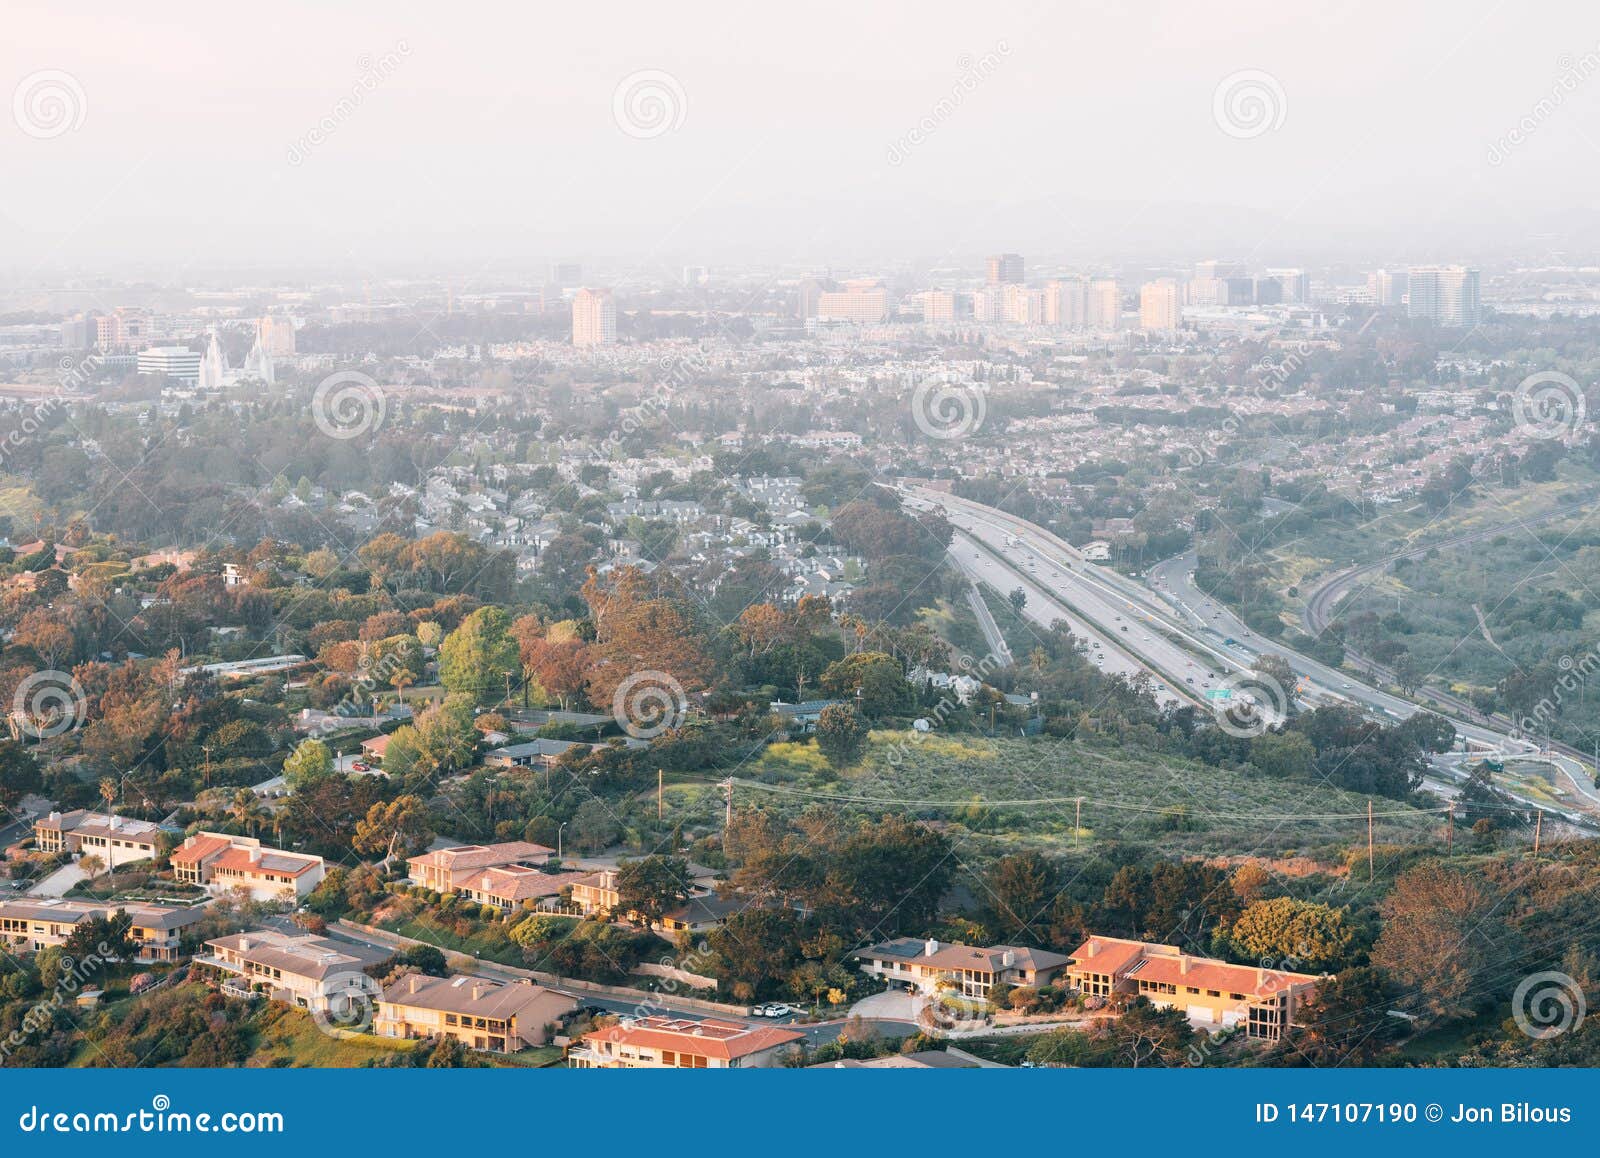 view of university city, from mount soledad in la jolla, san diego, california